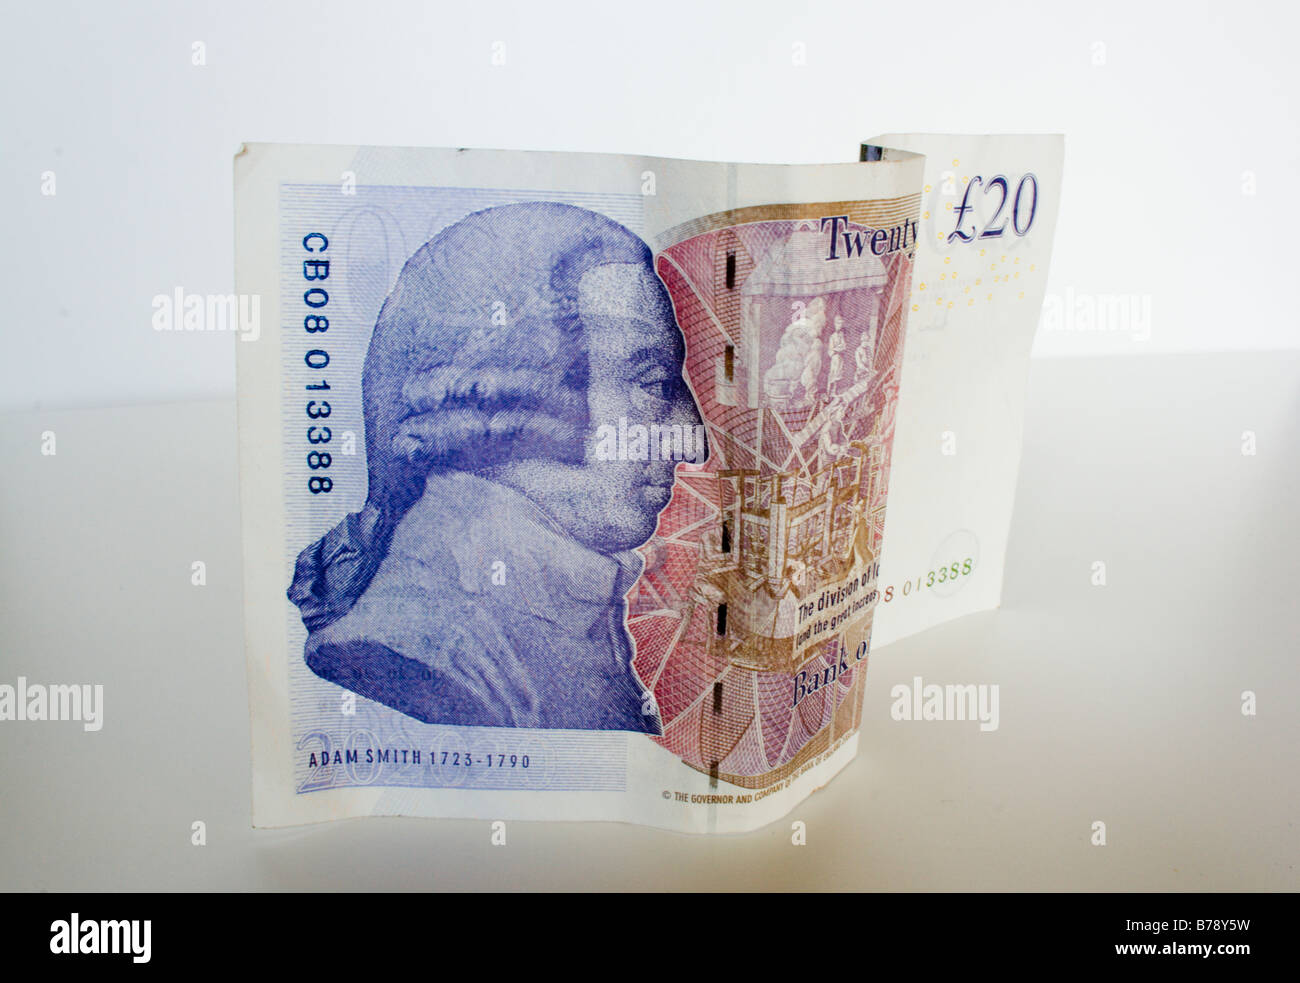 £20 sterling note showing 'Adam Smith' famous Scottish economist / philosopher Stock Photo